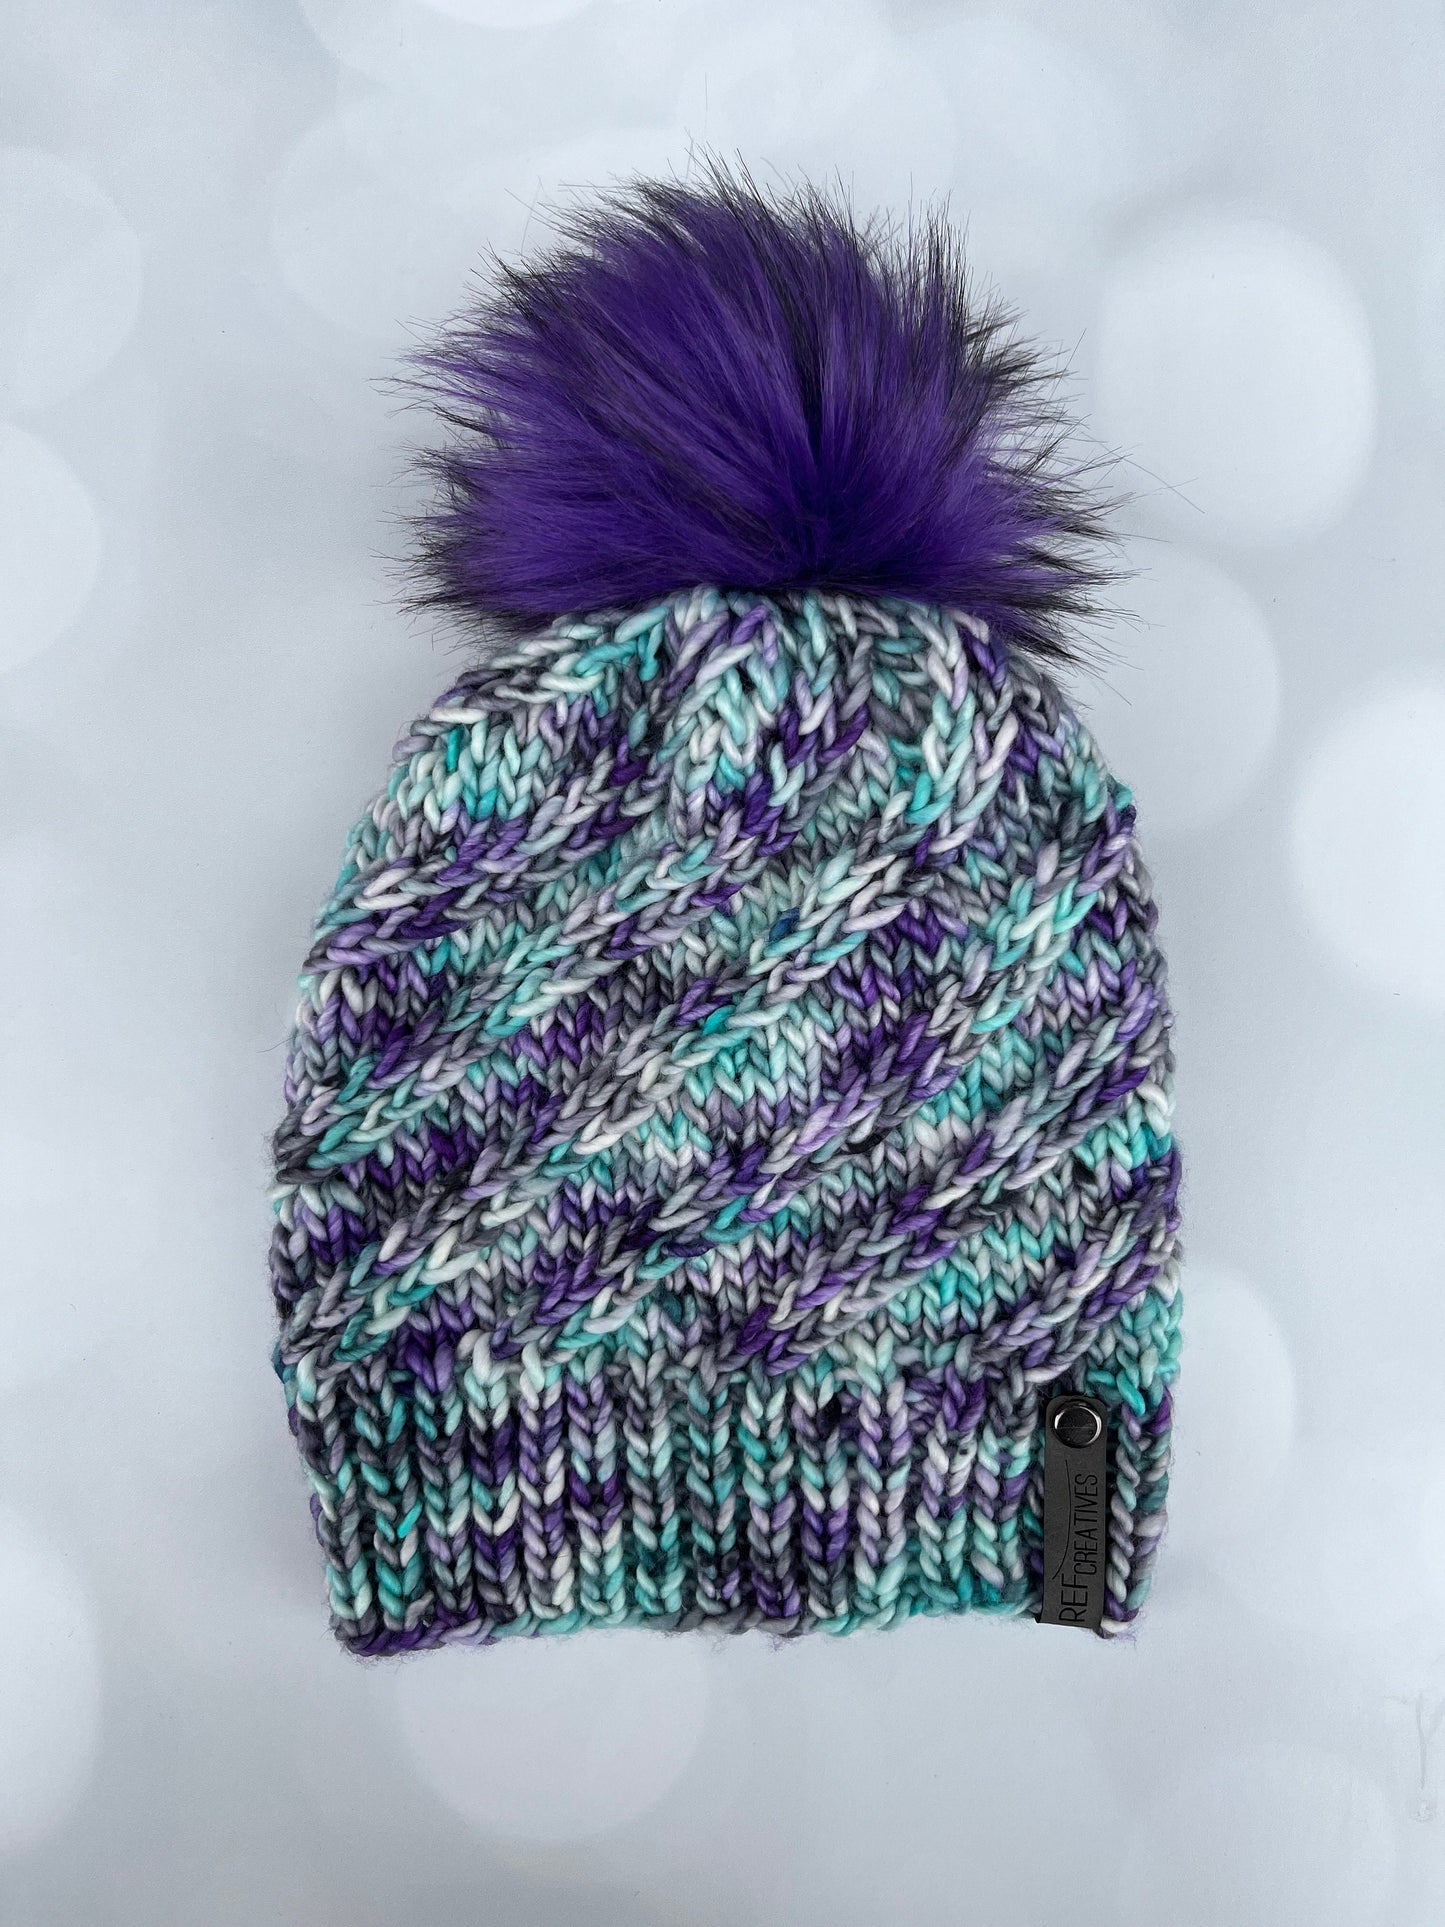 Ski Bum Swirls Hand Knit Hat with Hand Dyed Yarn